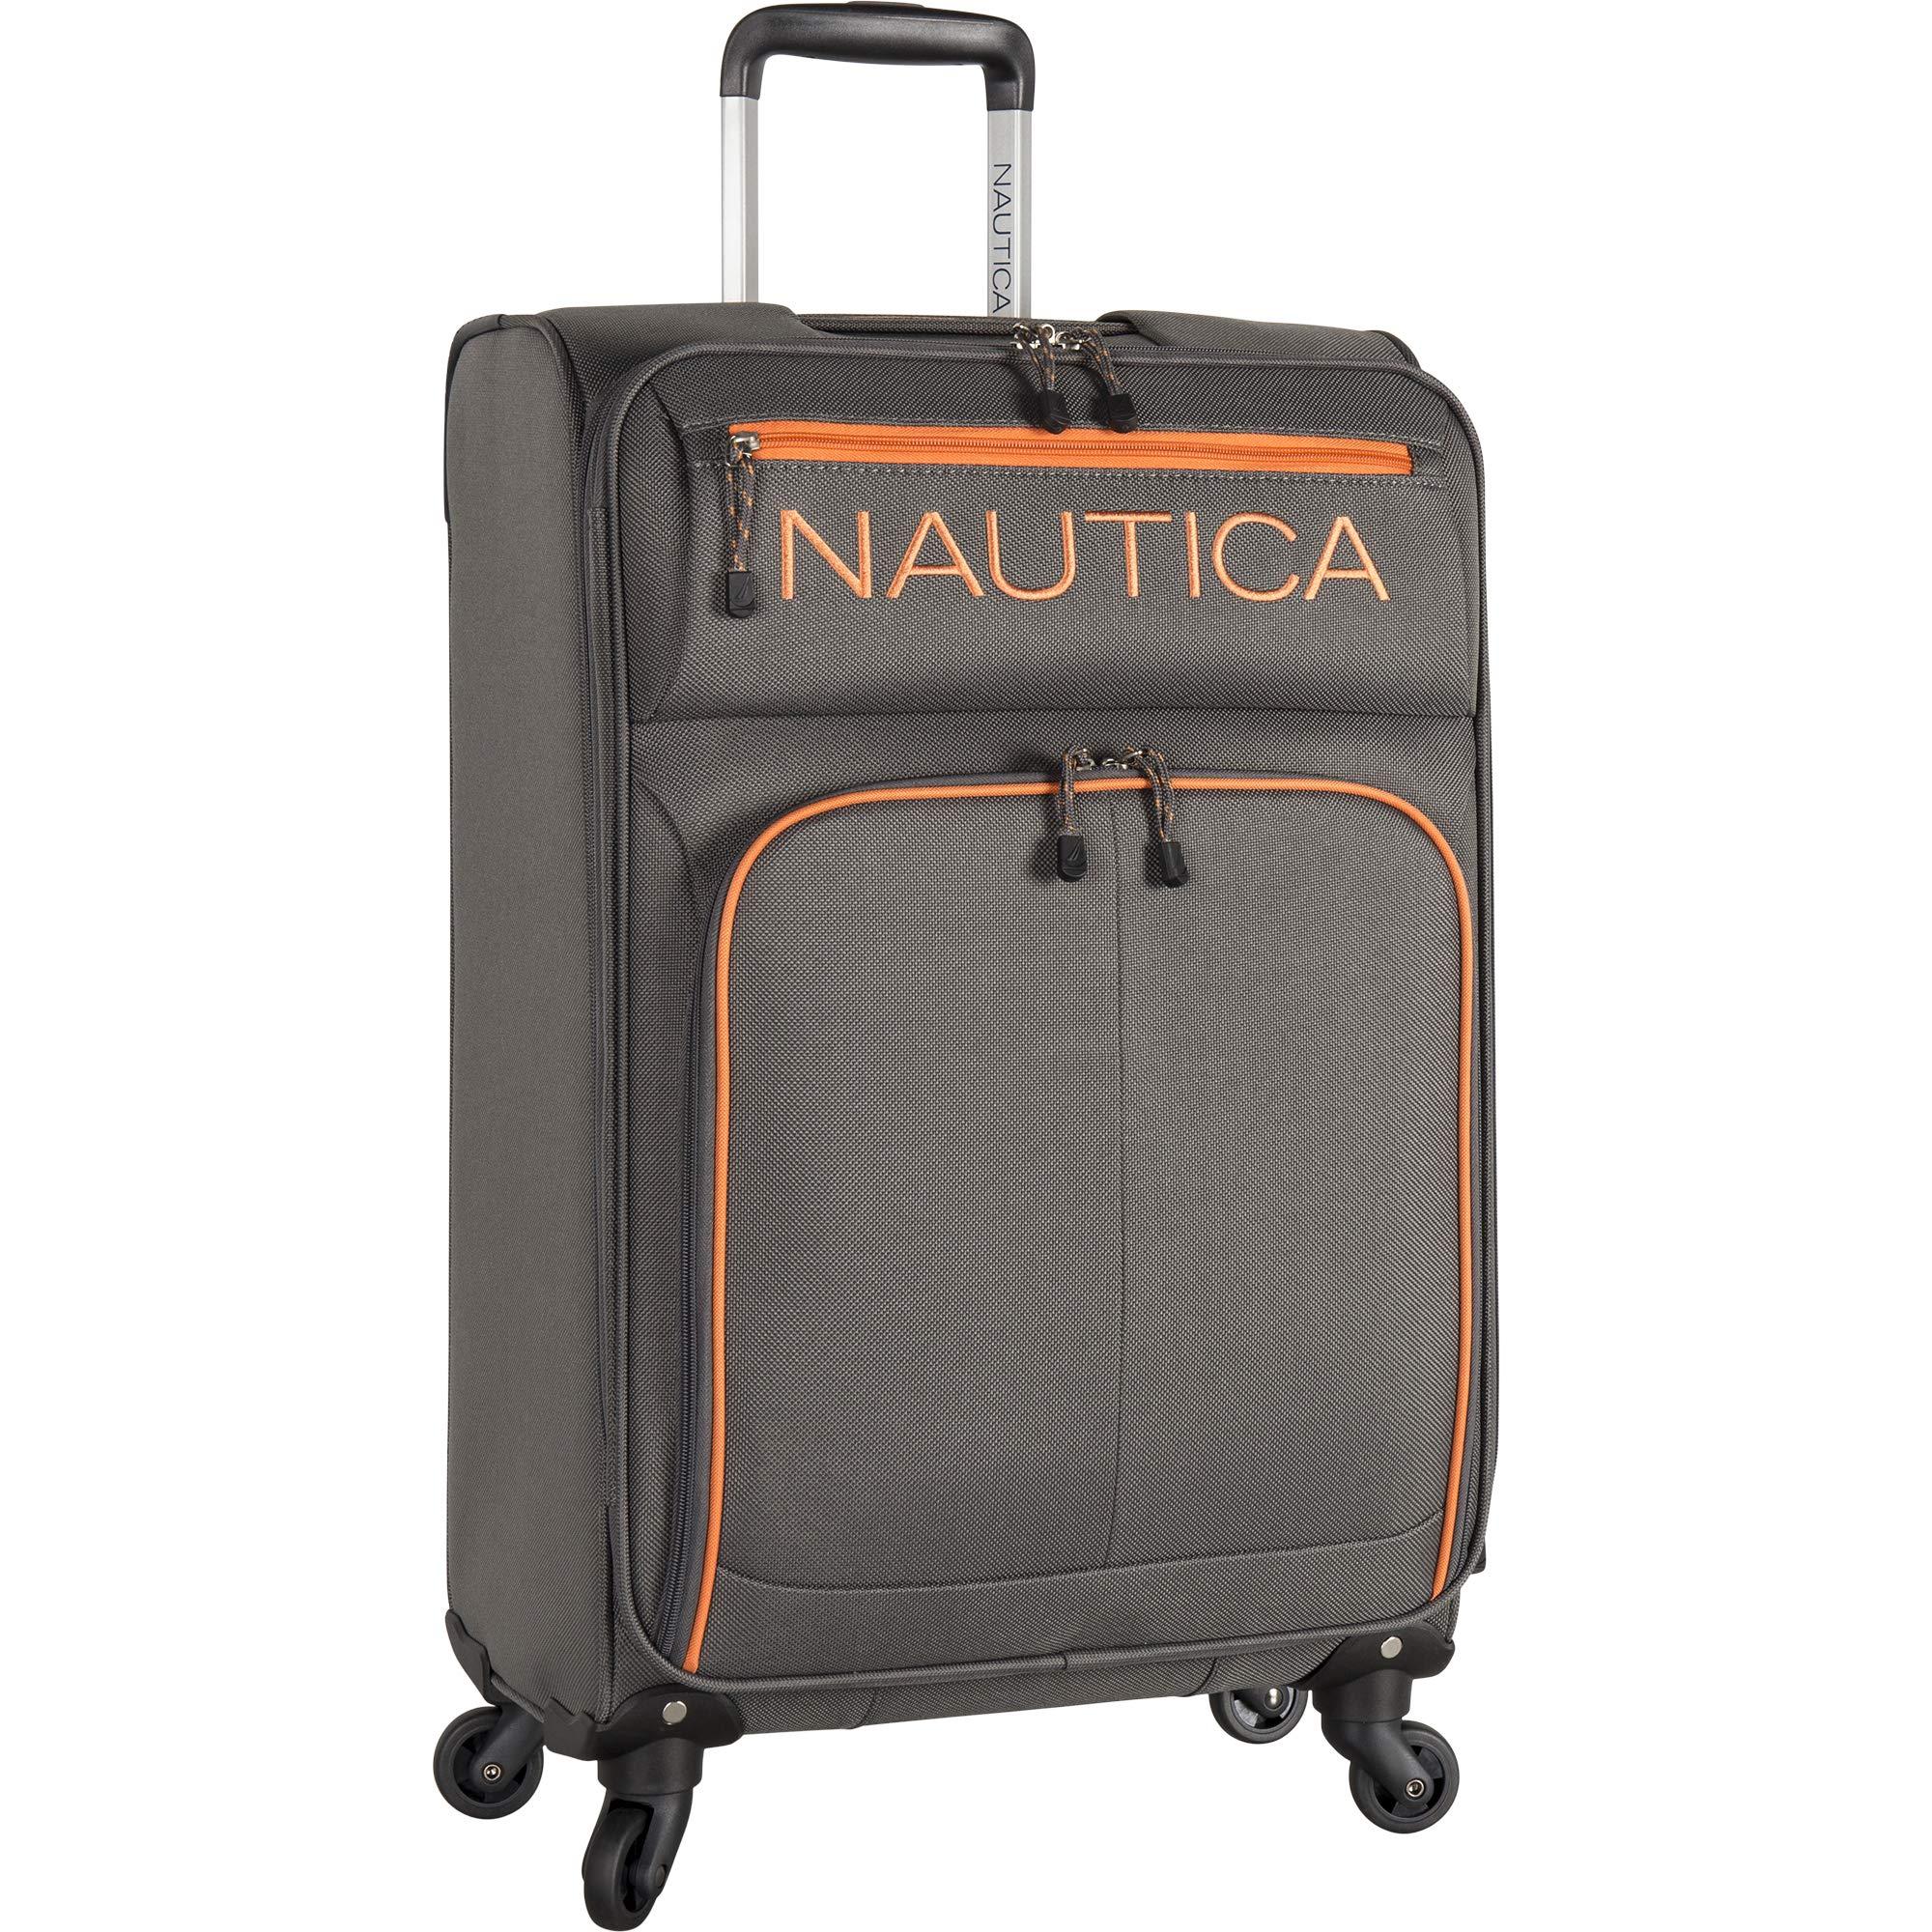 Nautica Luggage in Grey Orange (Gray) - Lyst